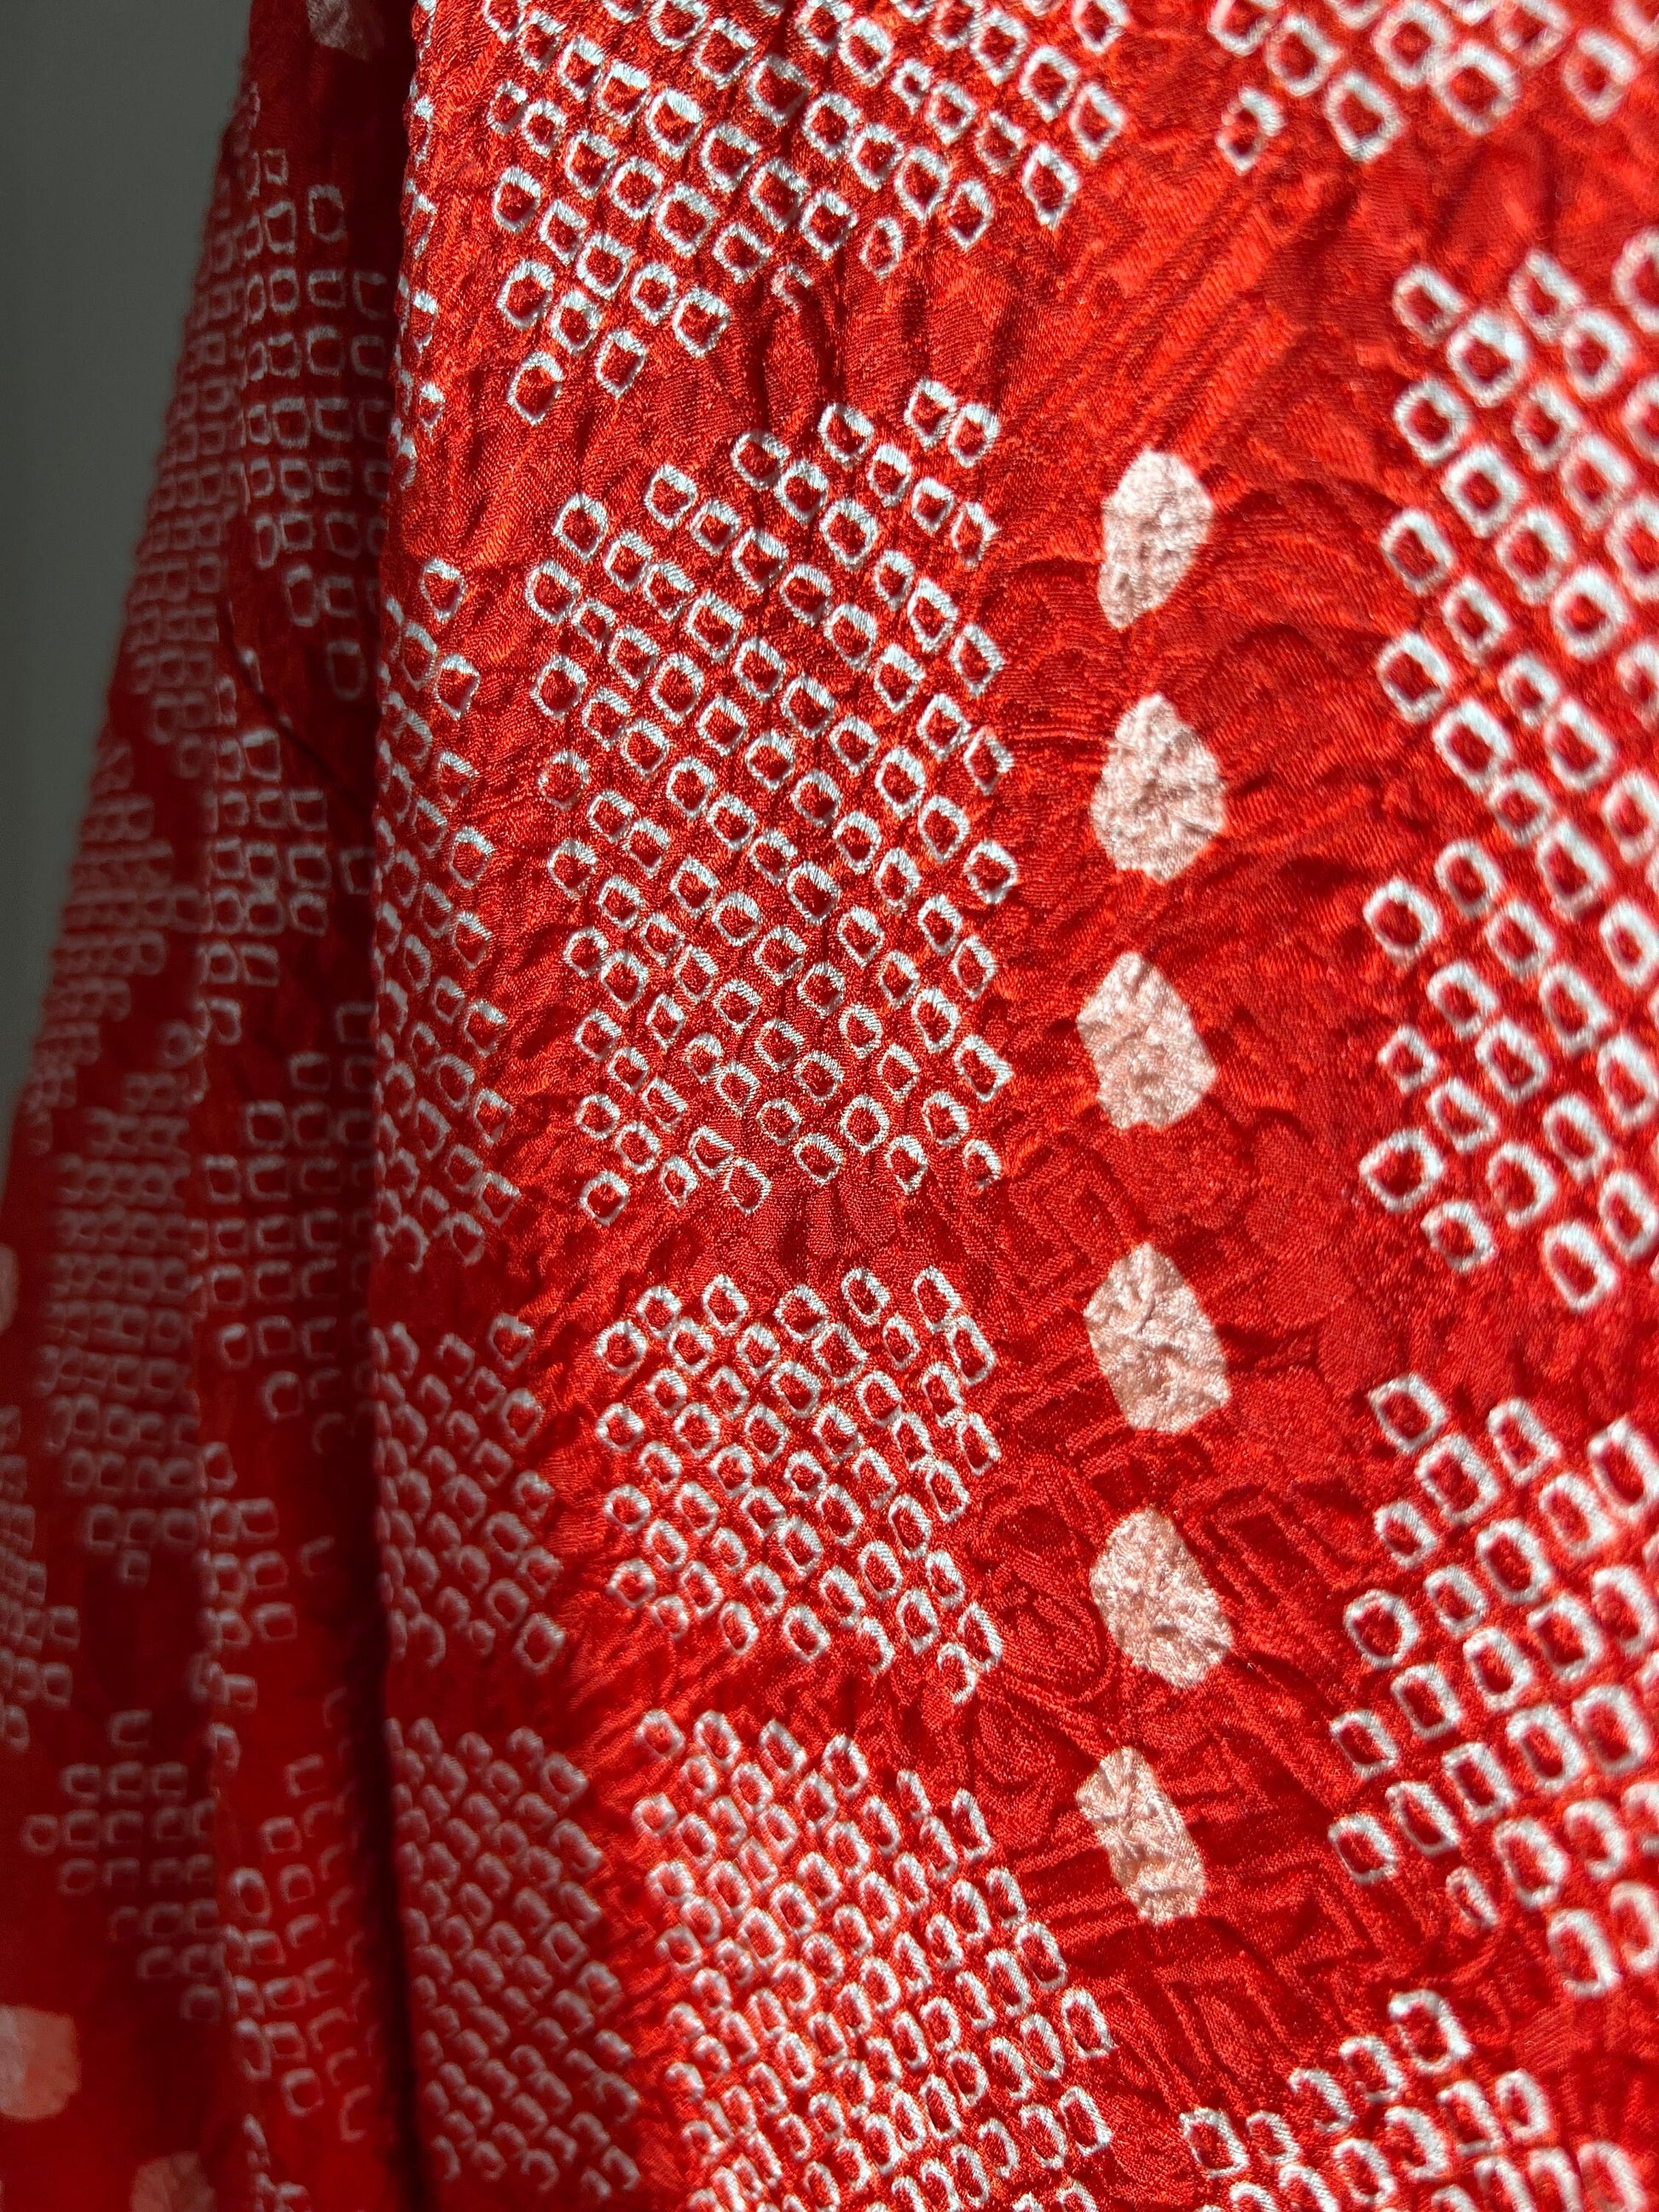 Antique kimono jacket (red tie dye) close up